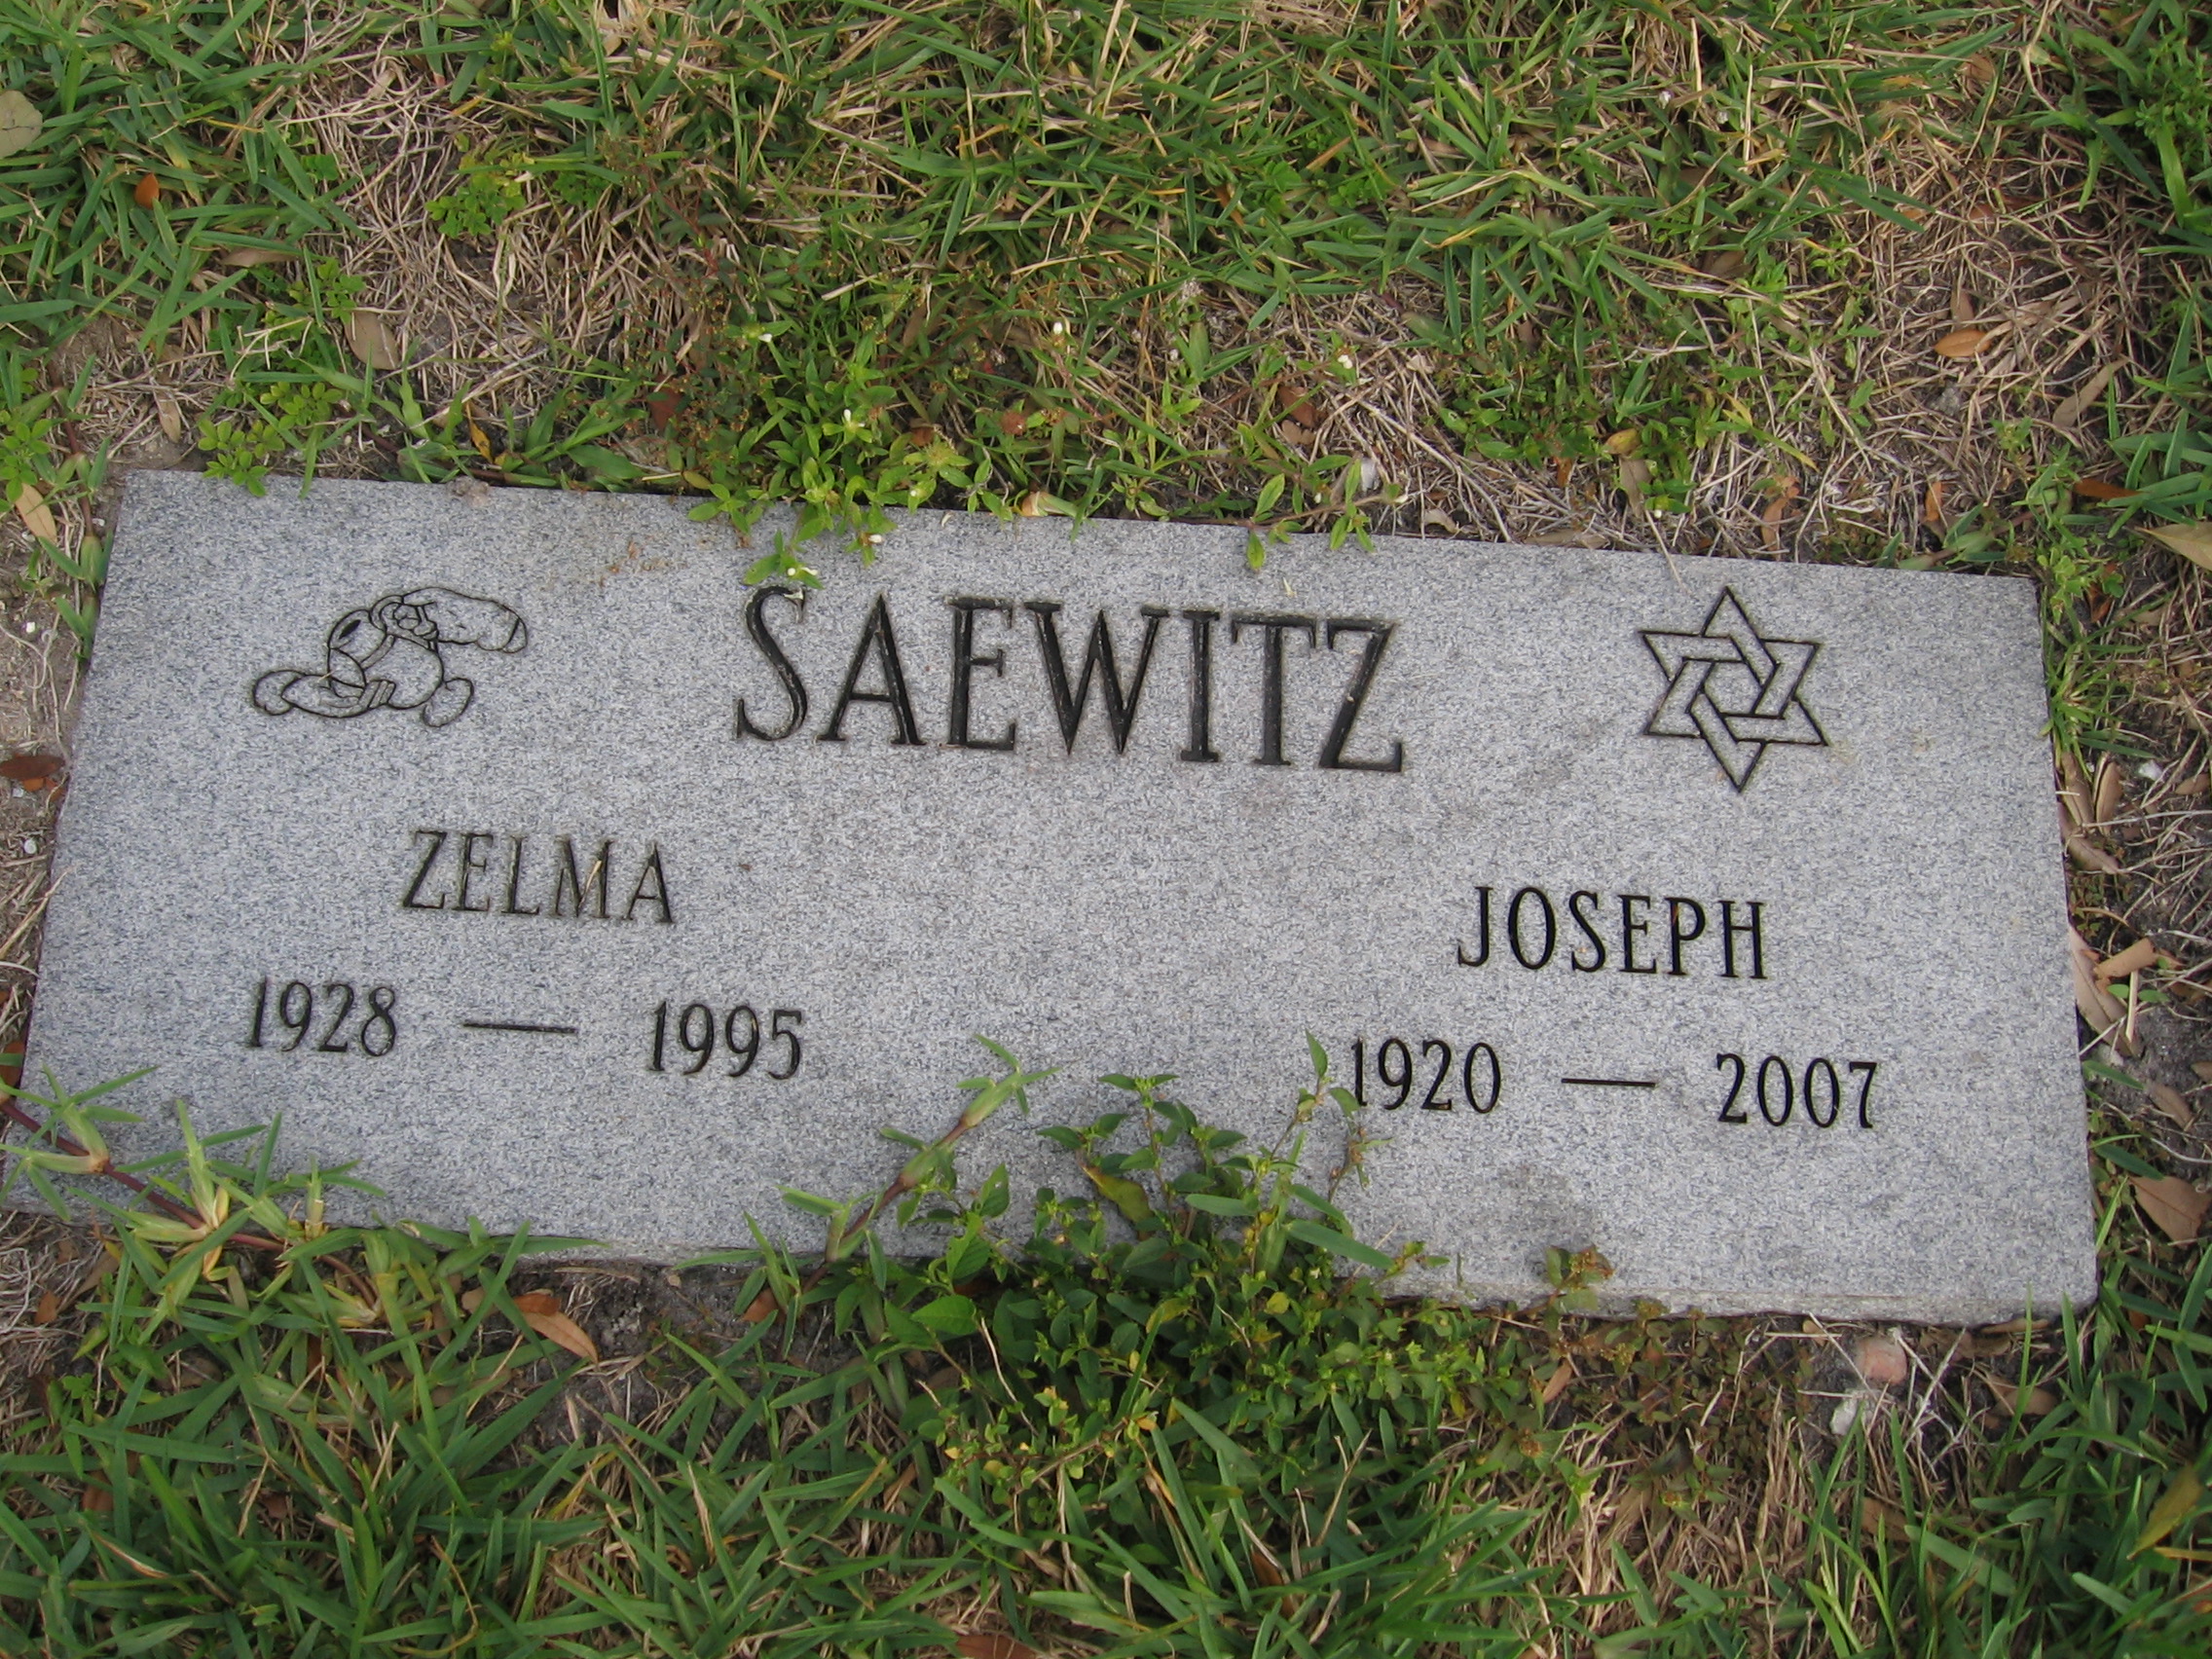 Joseph Saewitz